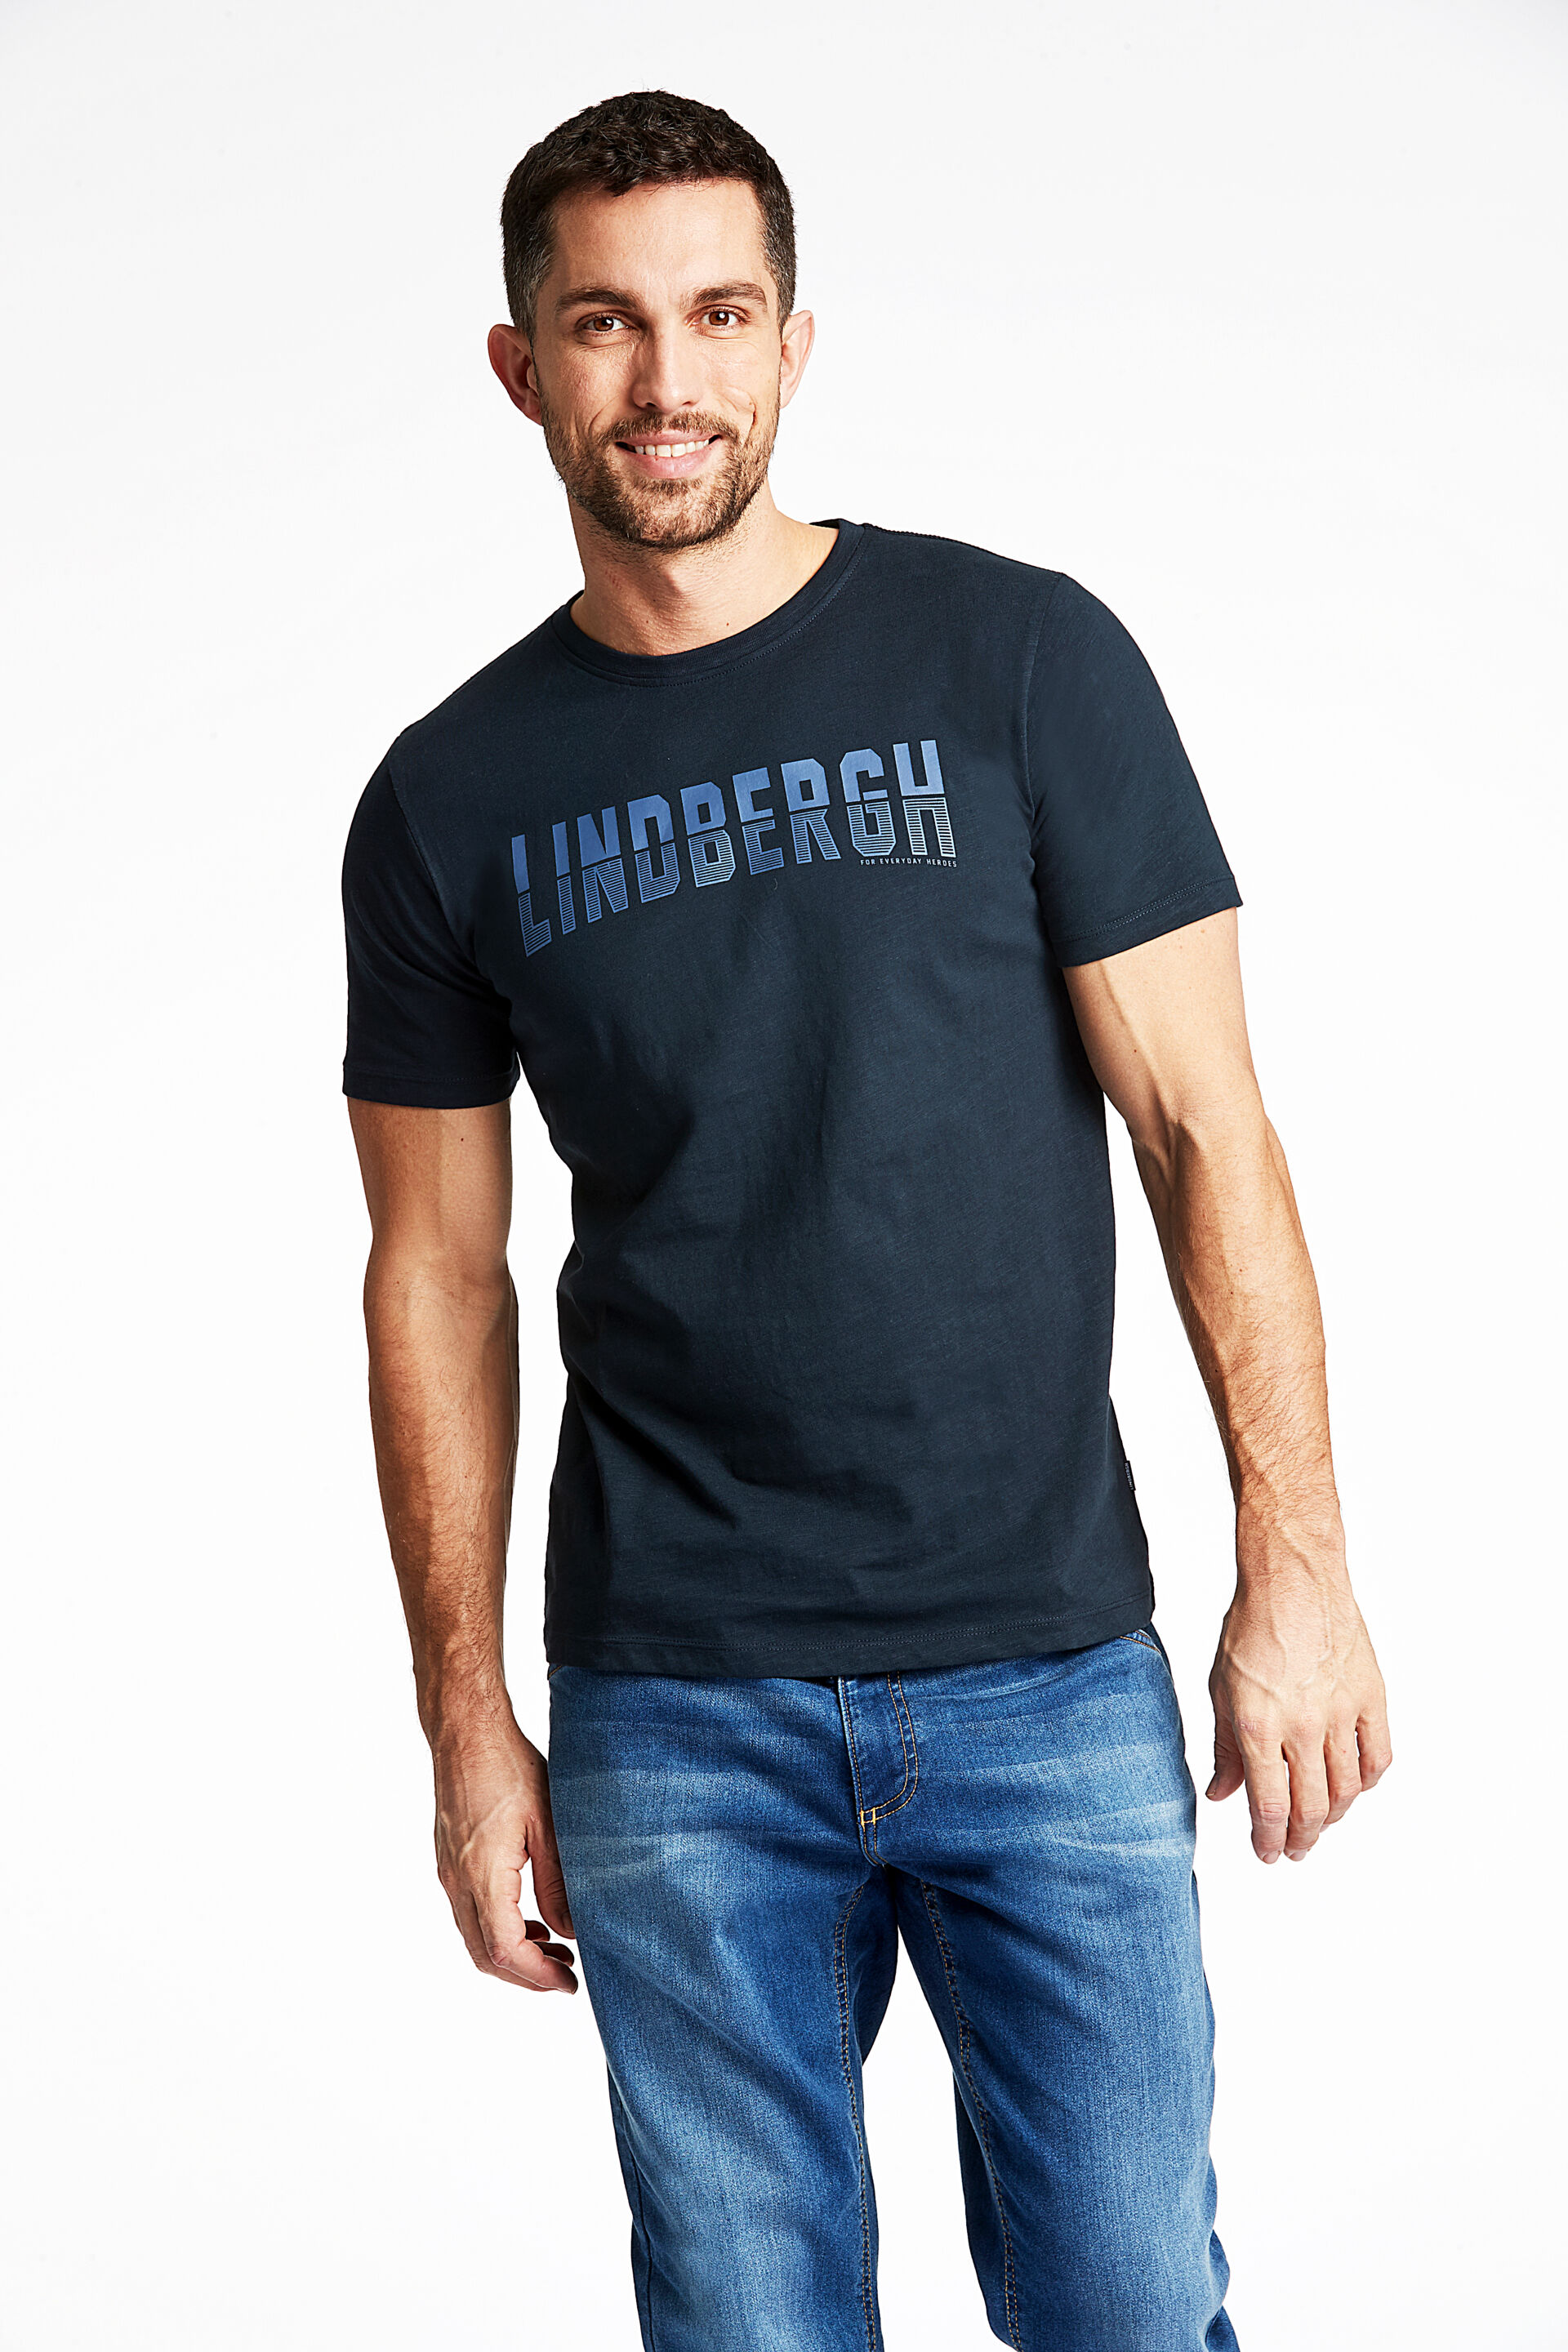 Lindbergh  T-shirt 30-420116